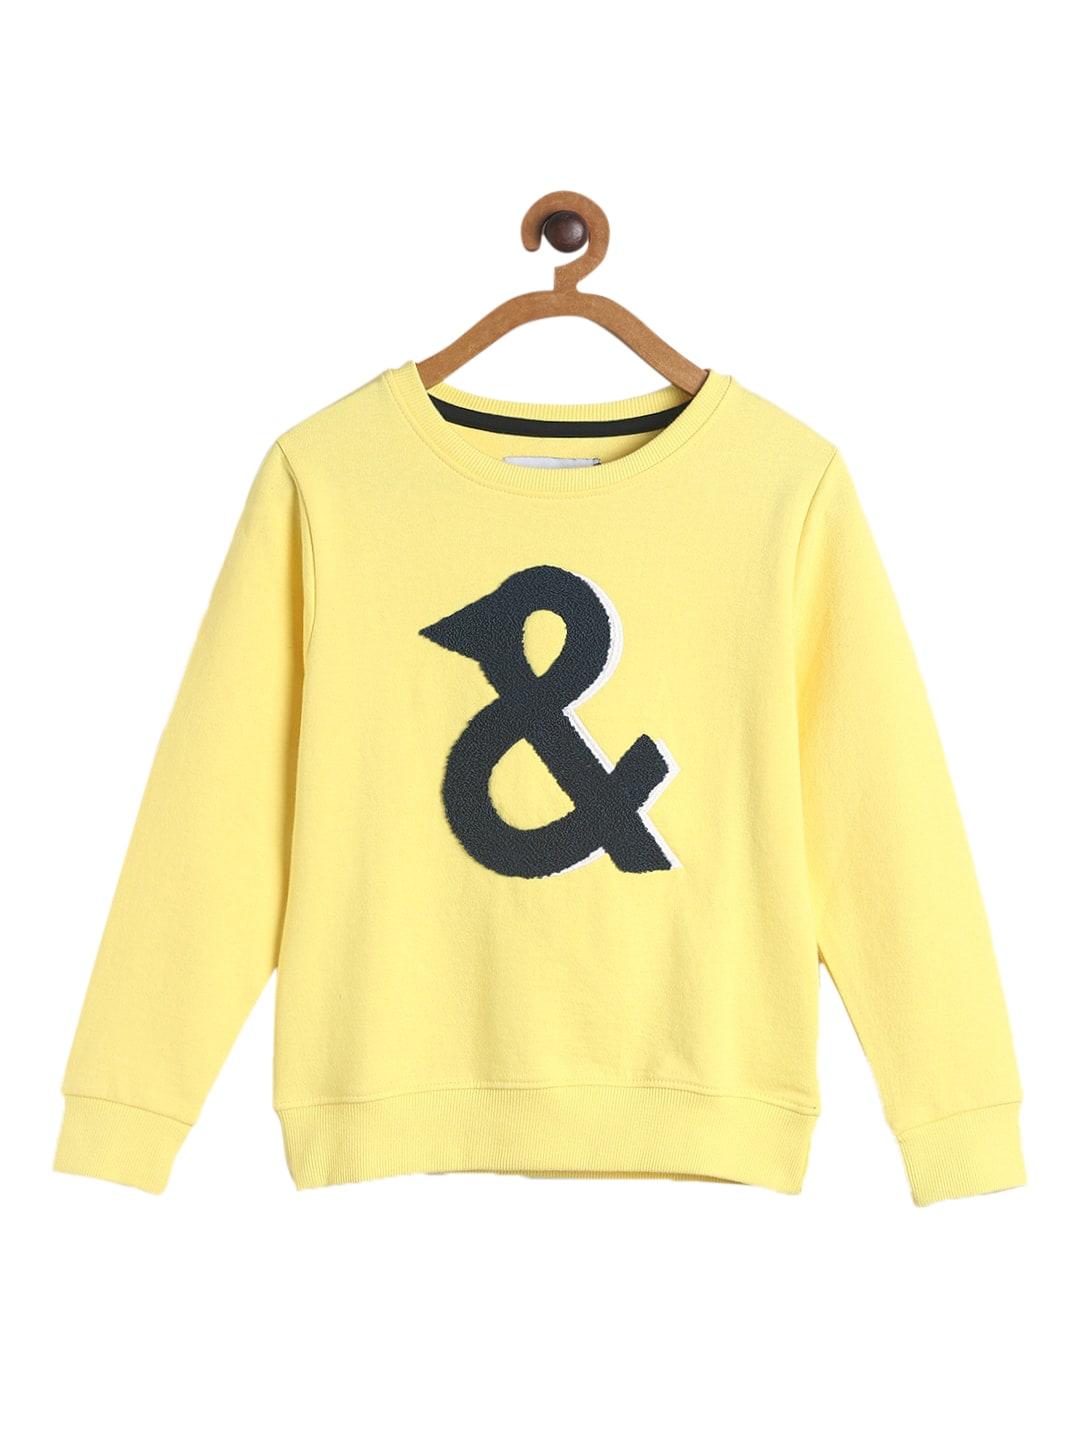 tales-&-stories-boys-yellow-printed-sweatshirt